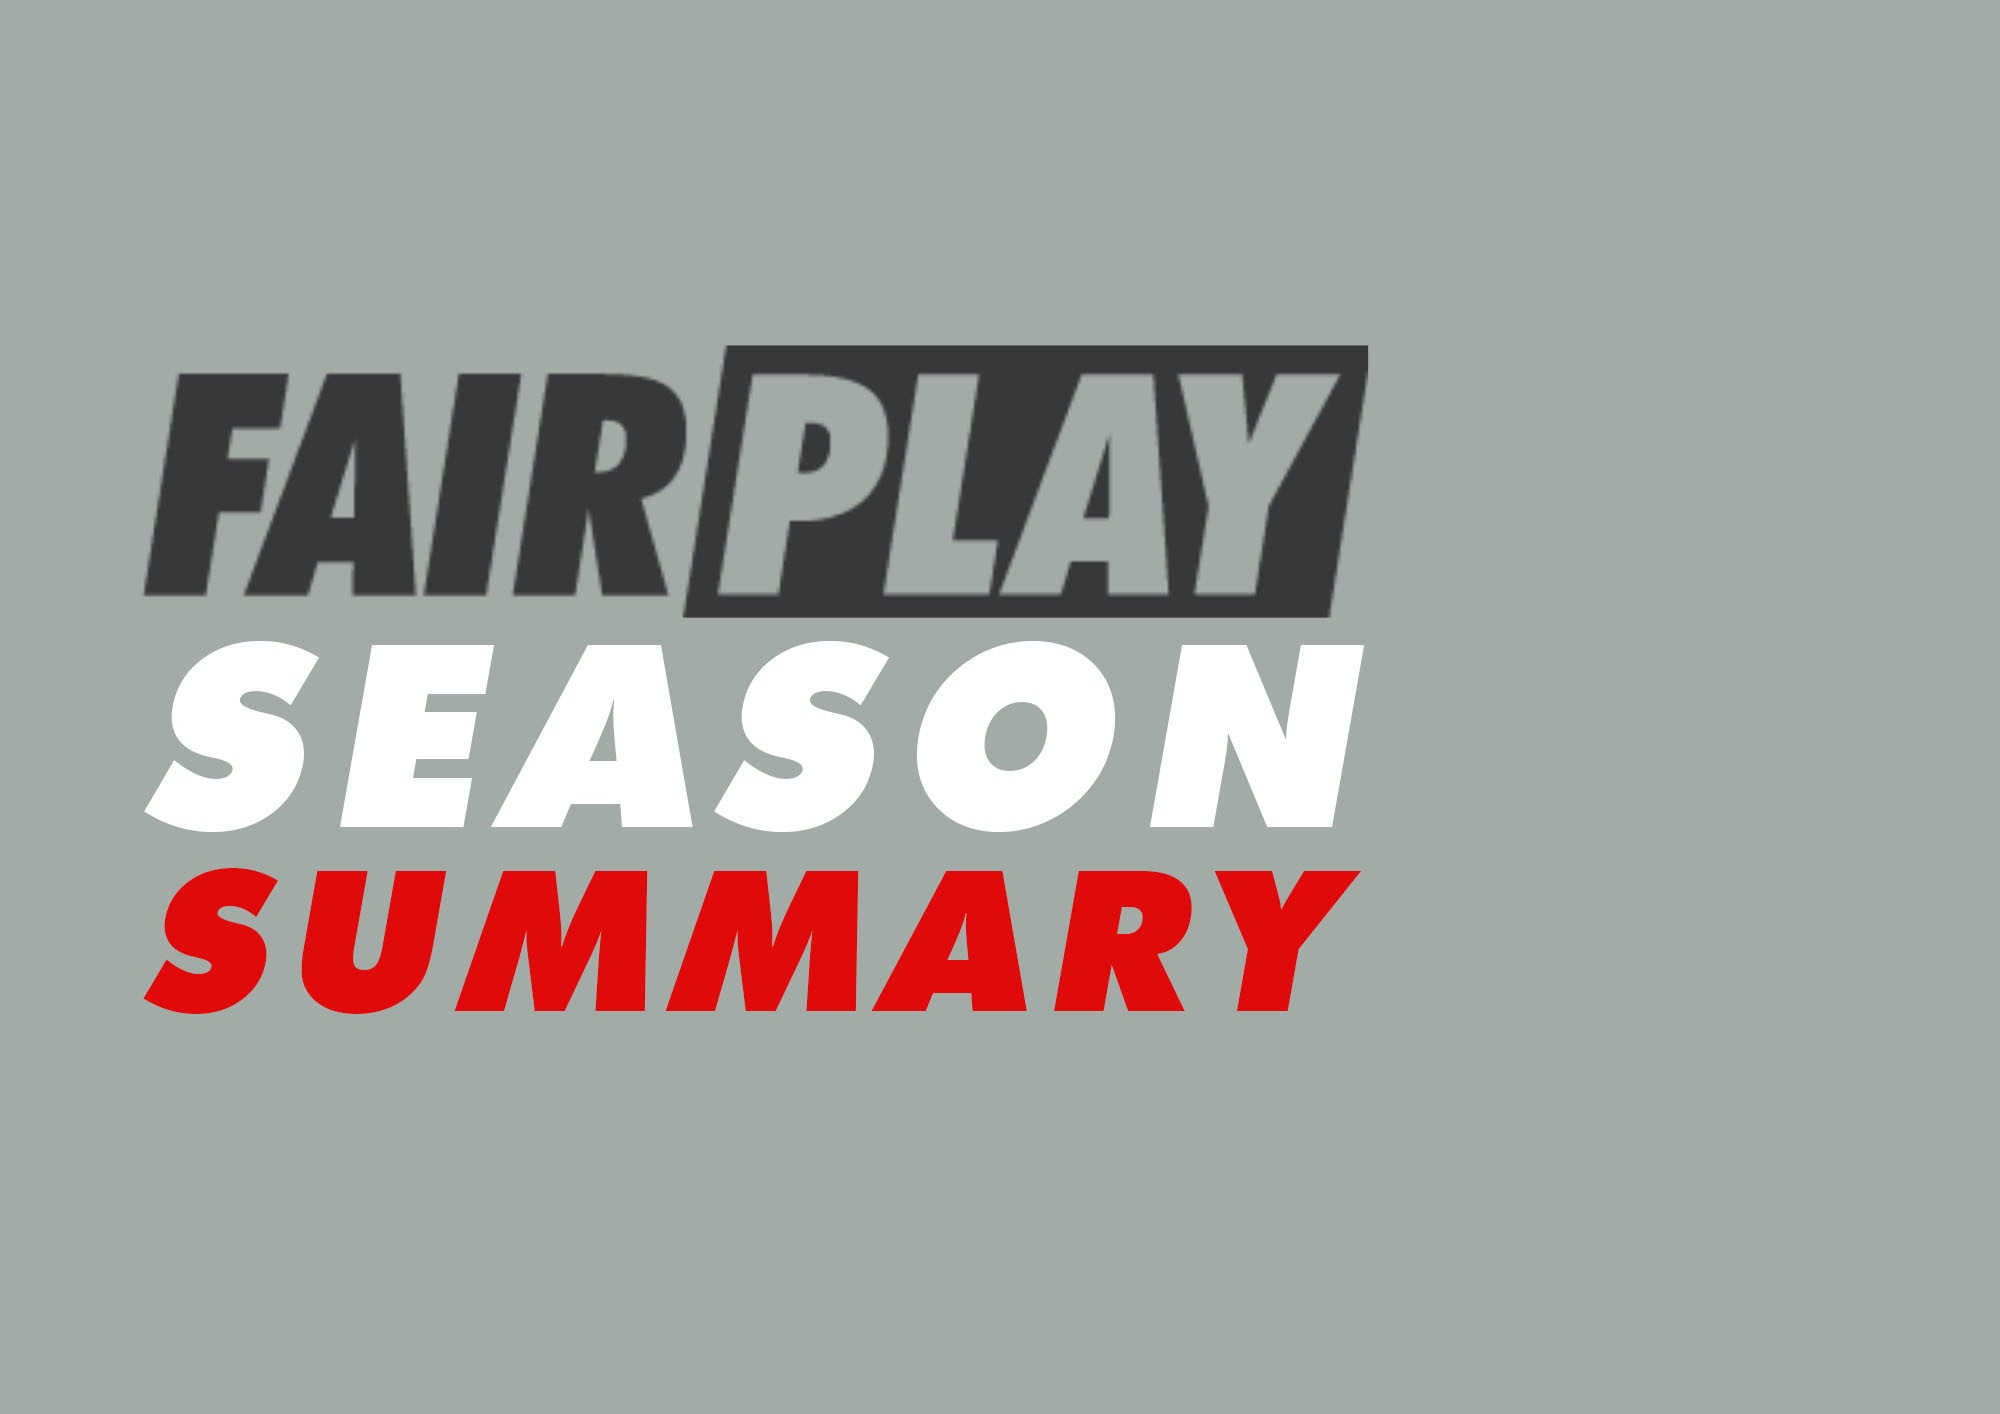 fairplay season summary